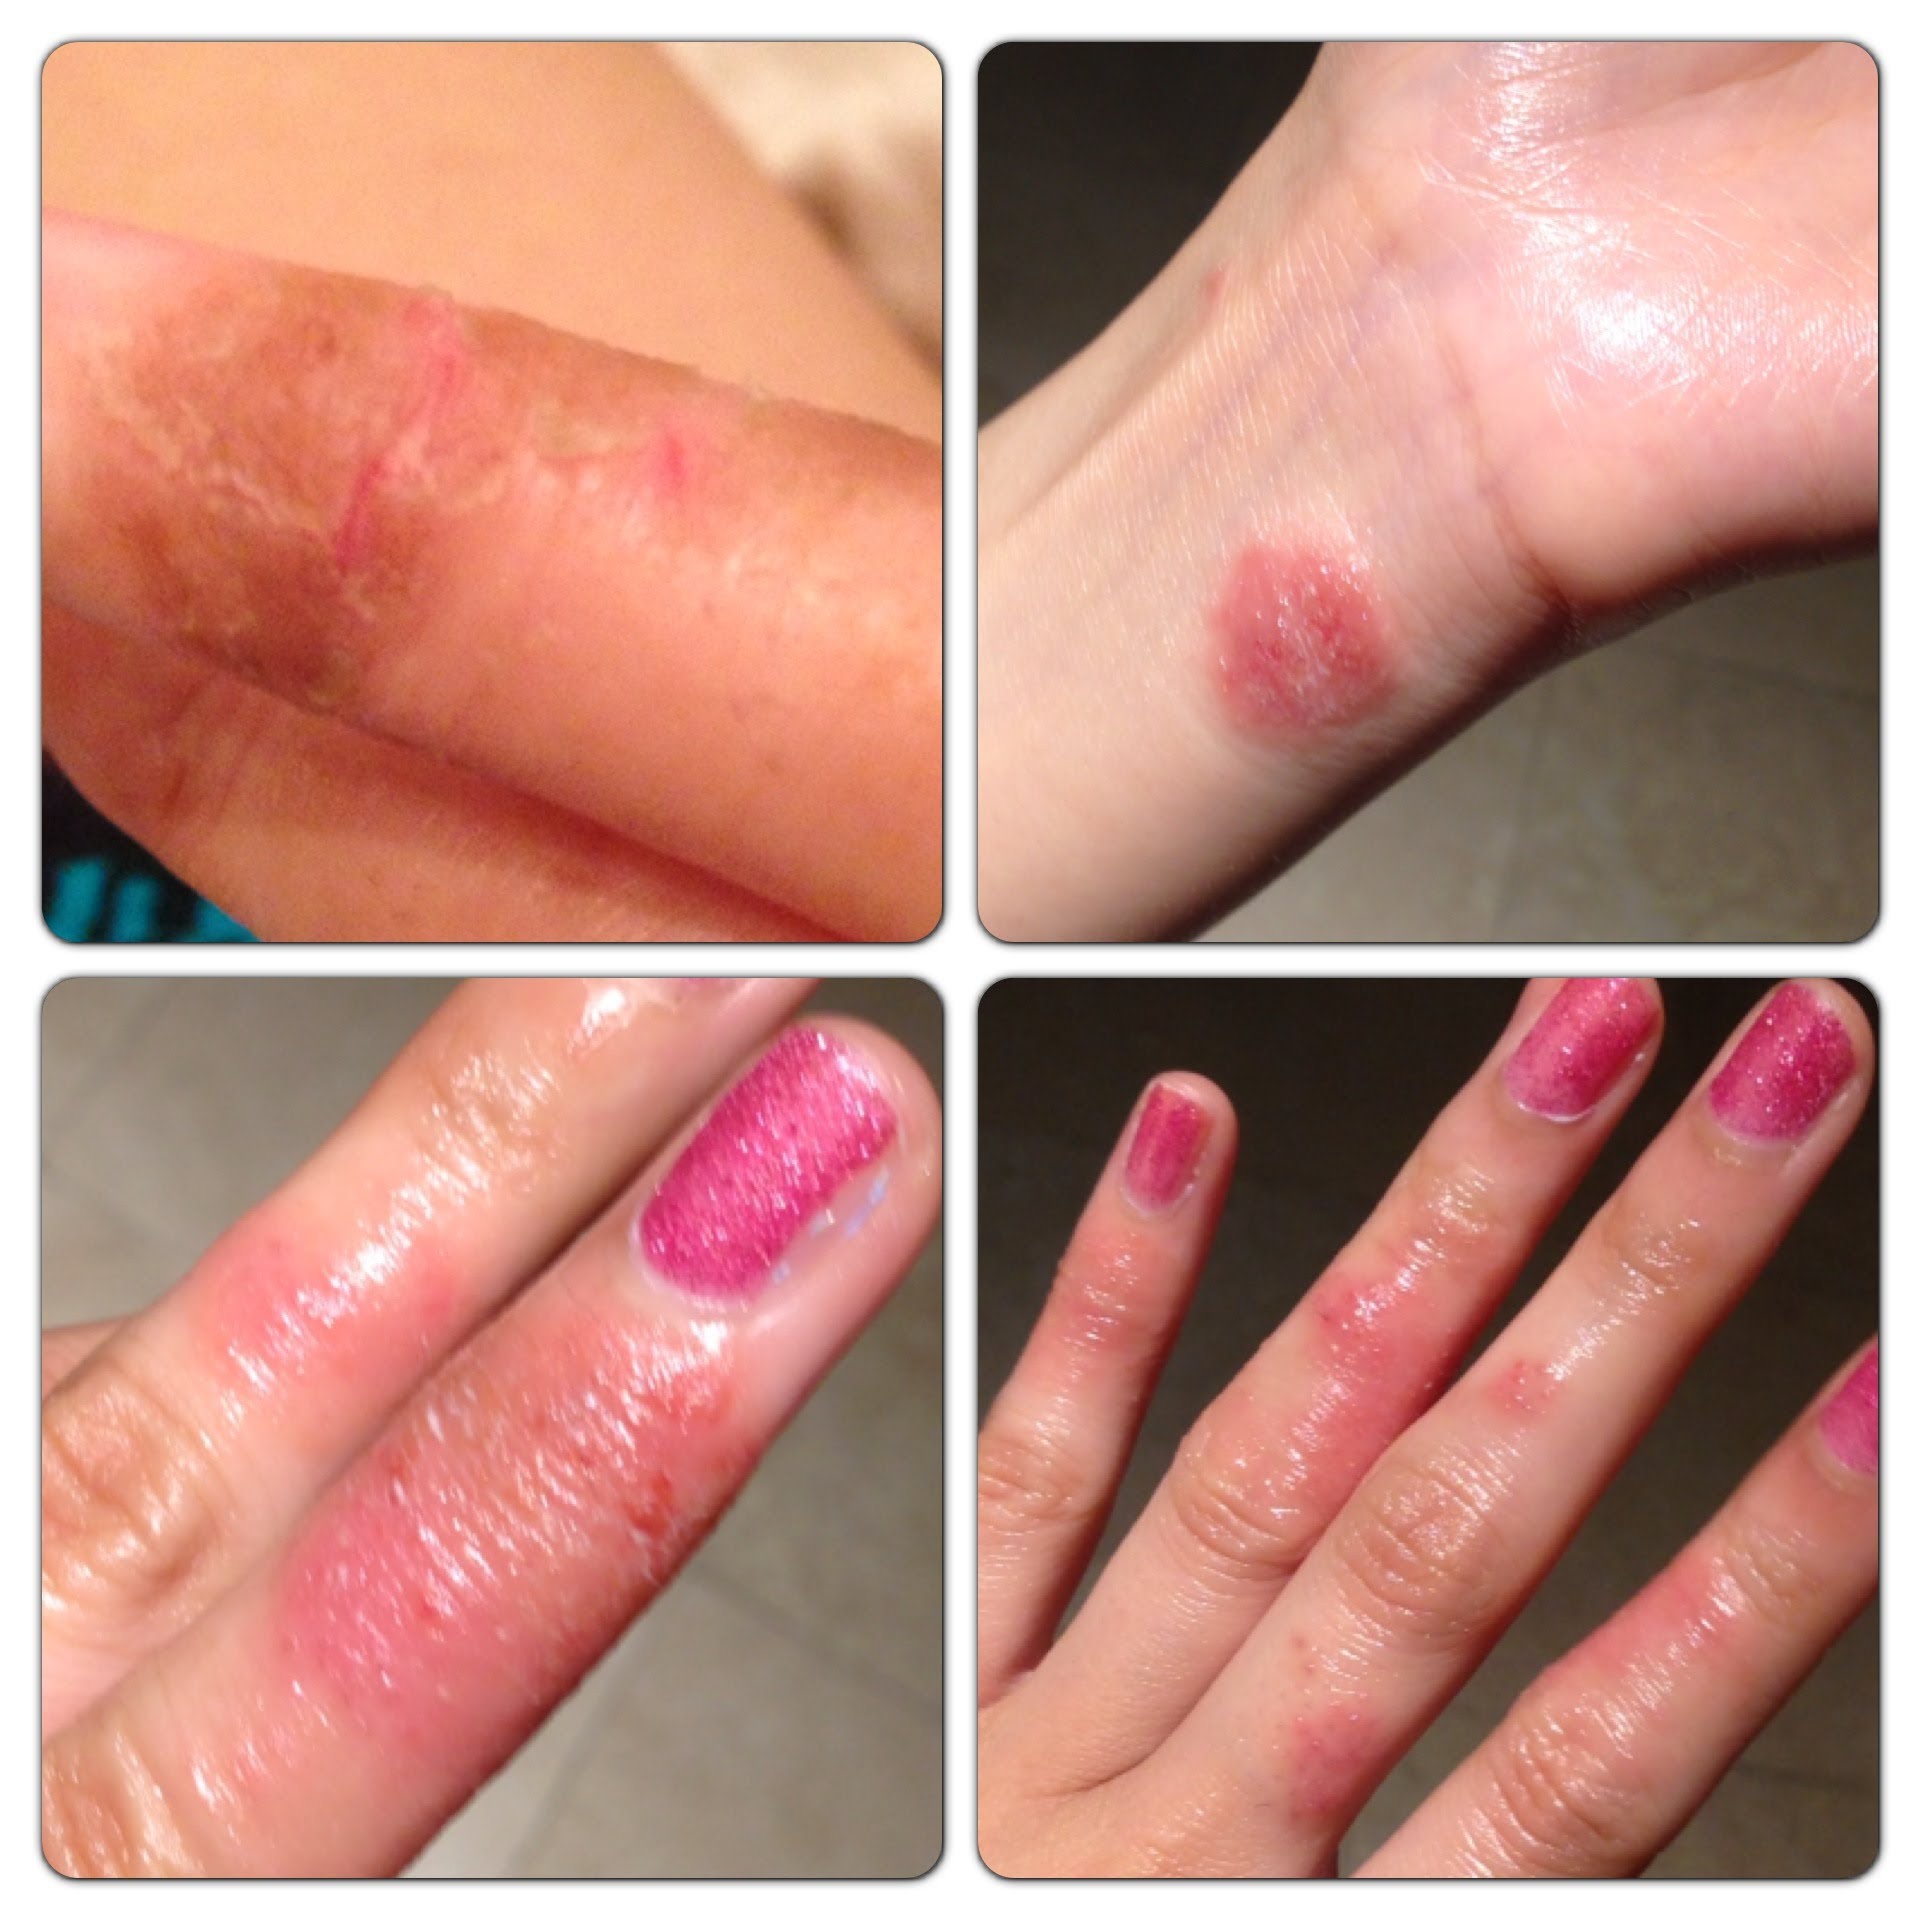 How to Treat Hand Eczema